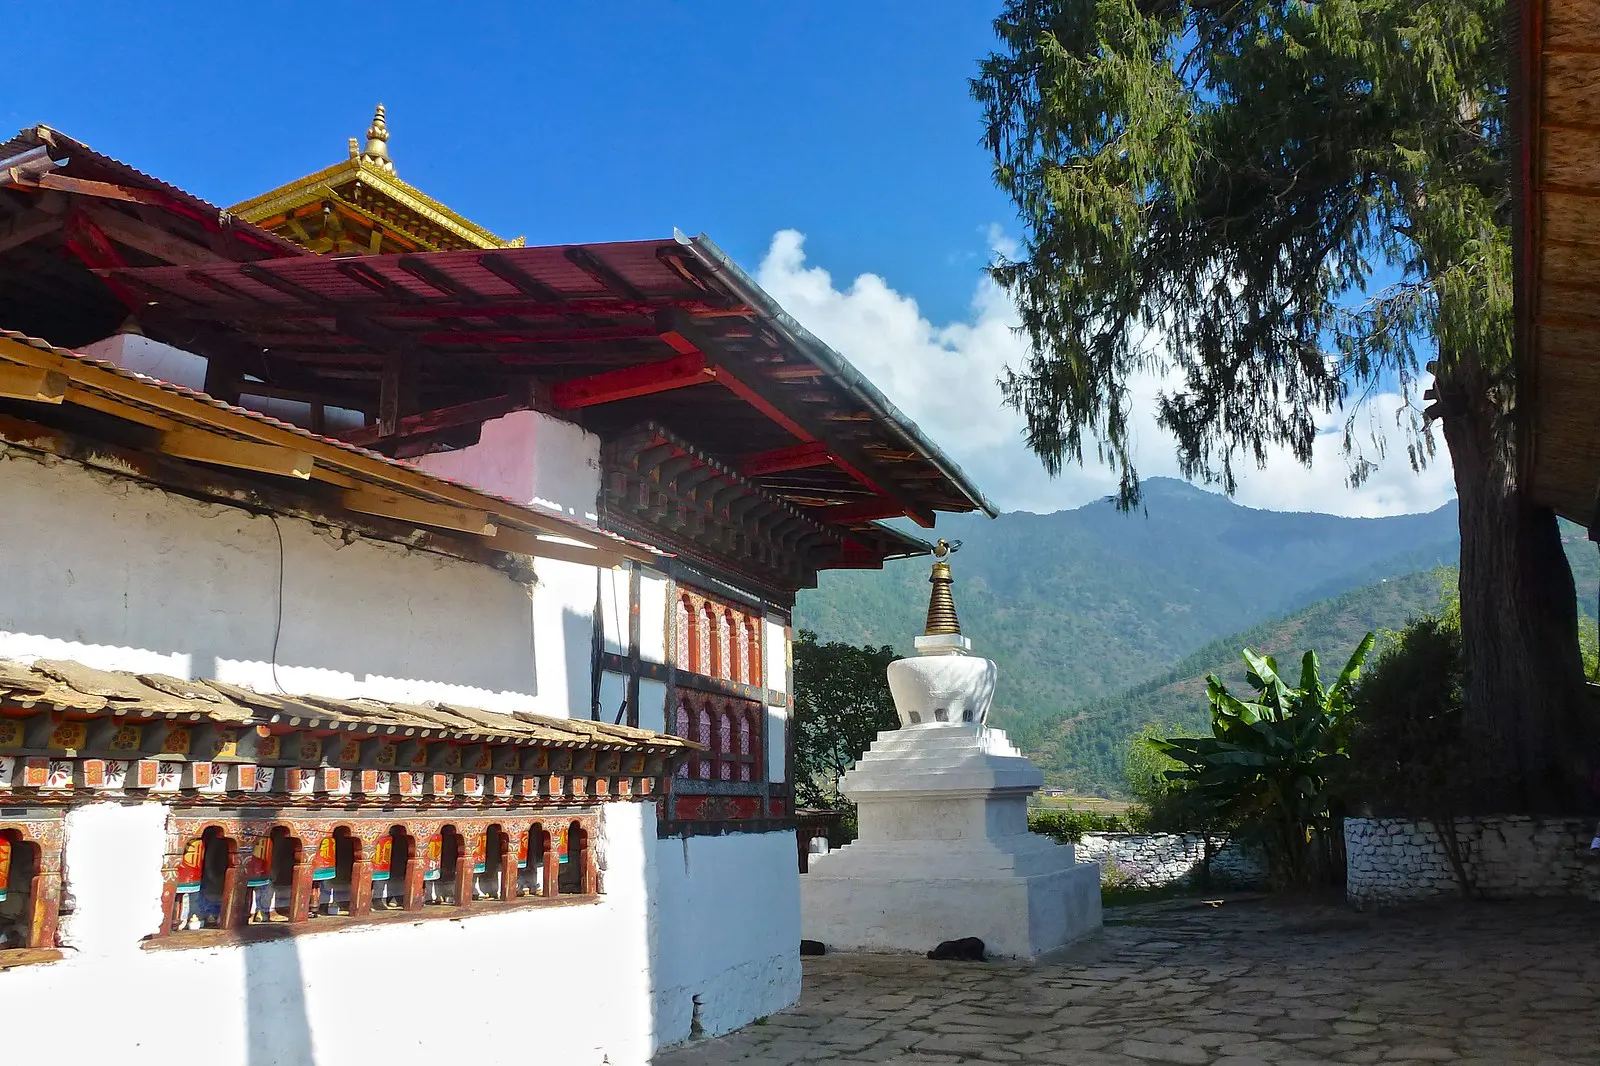 Kichu Lakhang Kloster in Paro